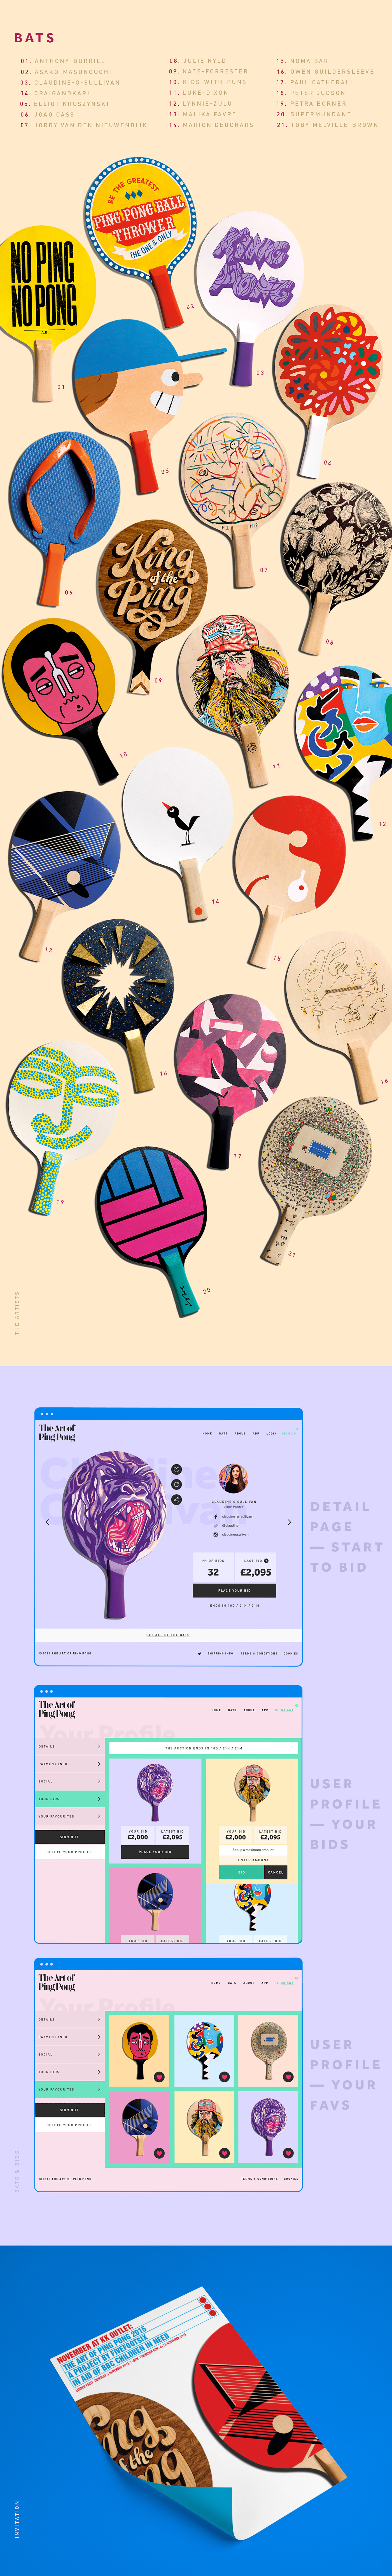 ping pong bat Website app colours flat Responsive inspiration charity beacons illustrations